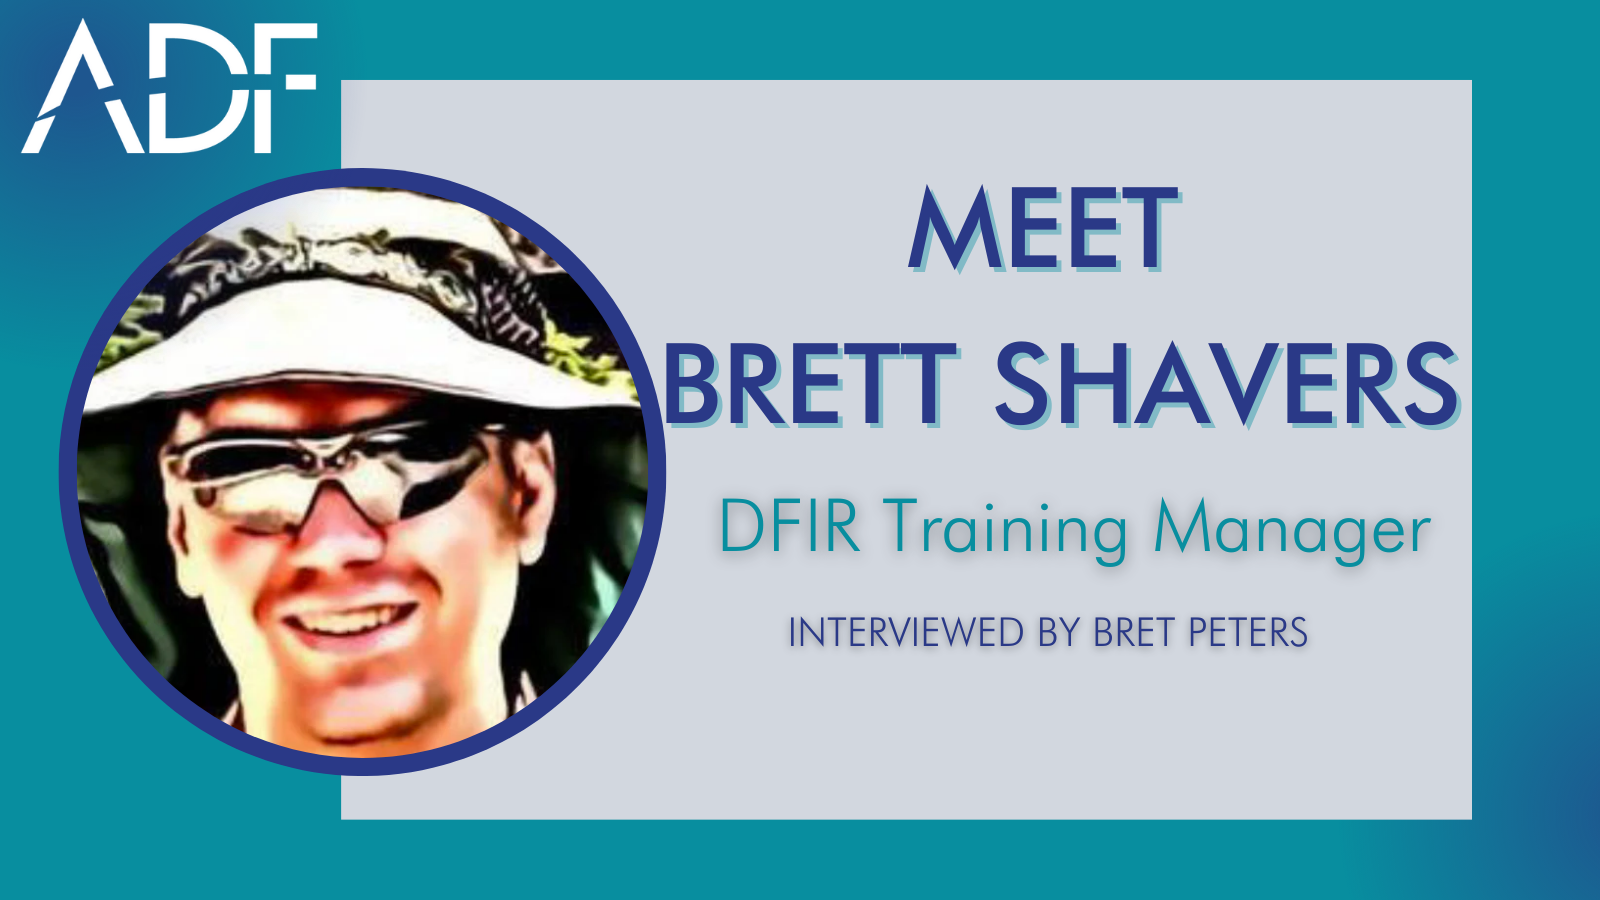 Meet Brett Shavers, DFIR Training Manager